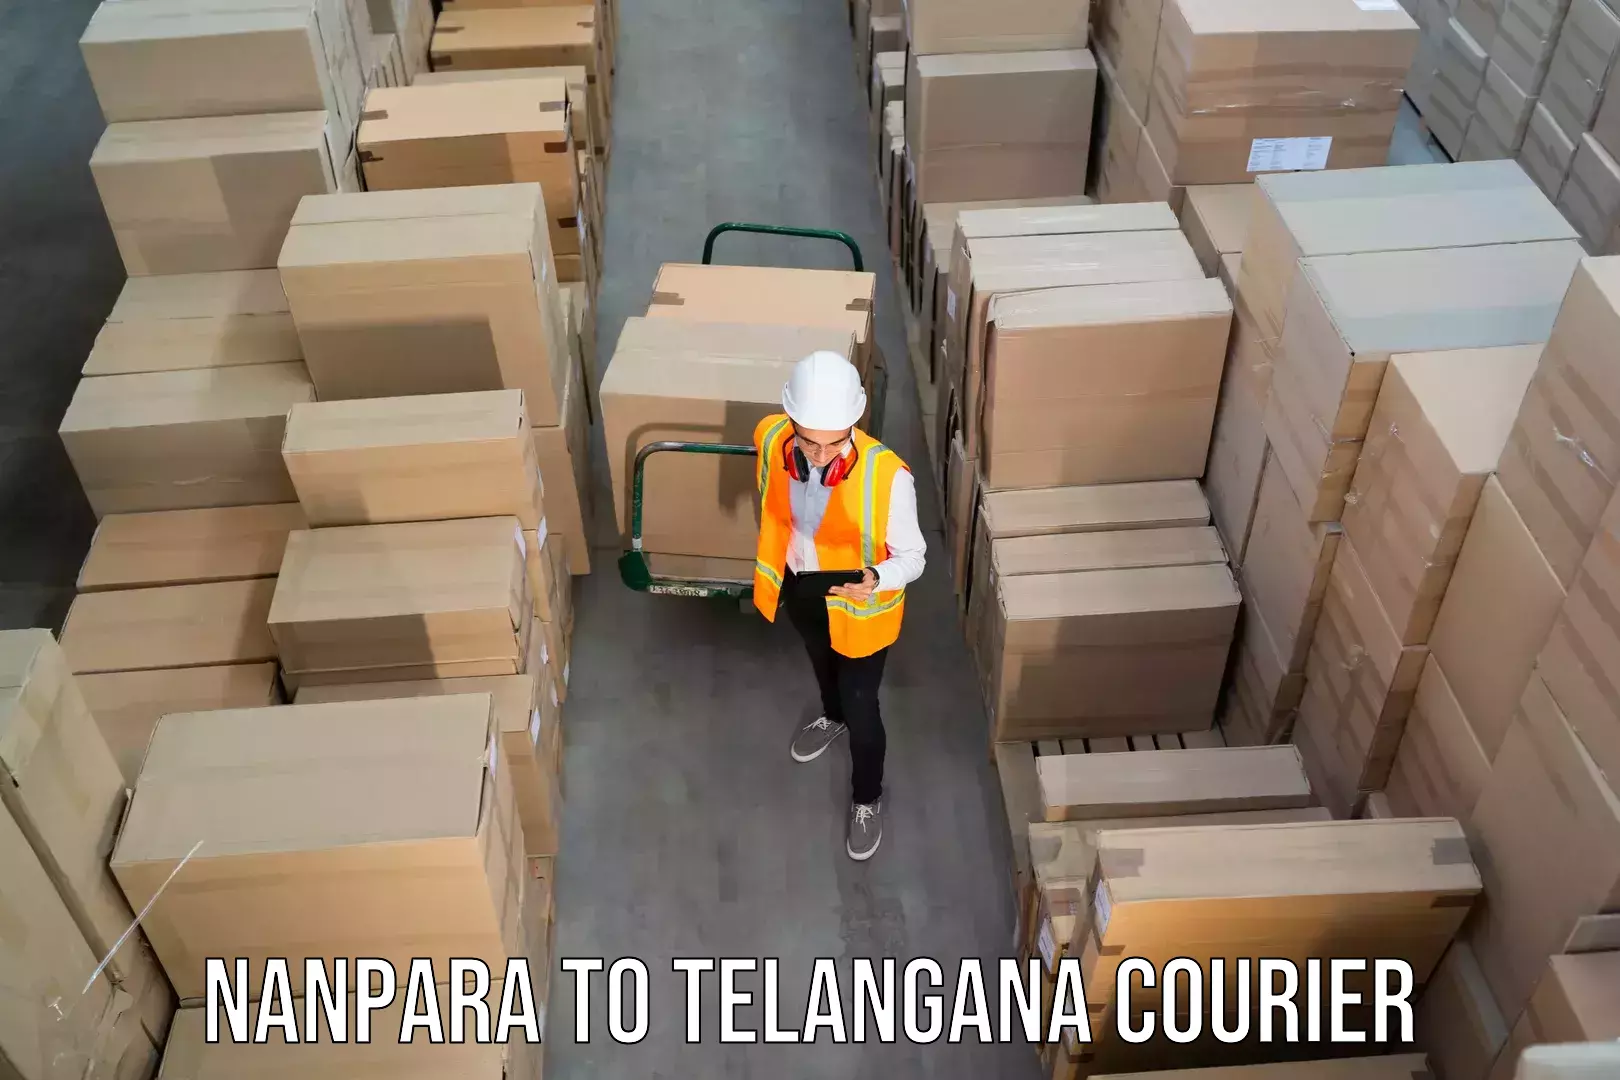 Courier service comparison Nanpara to Secunderabad